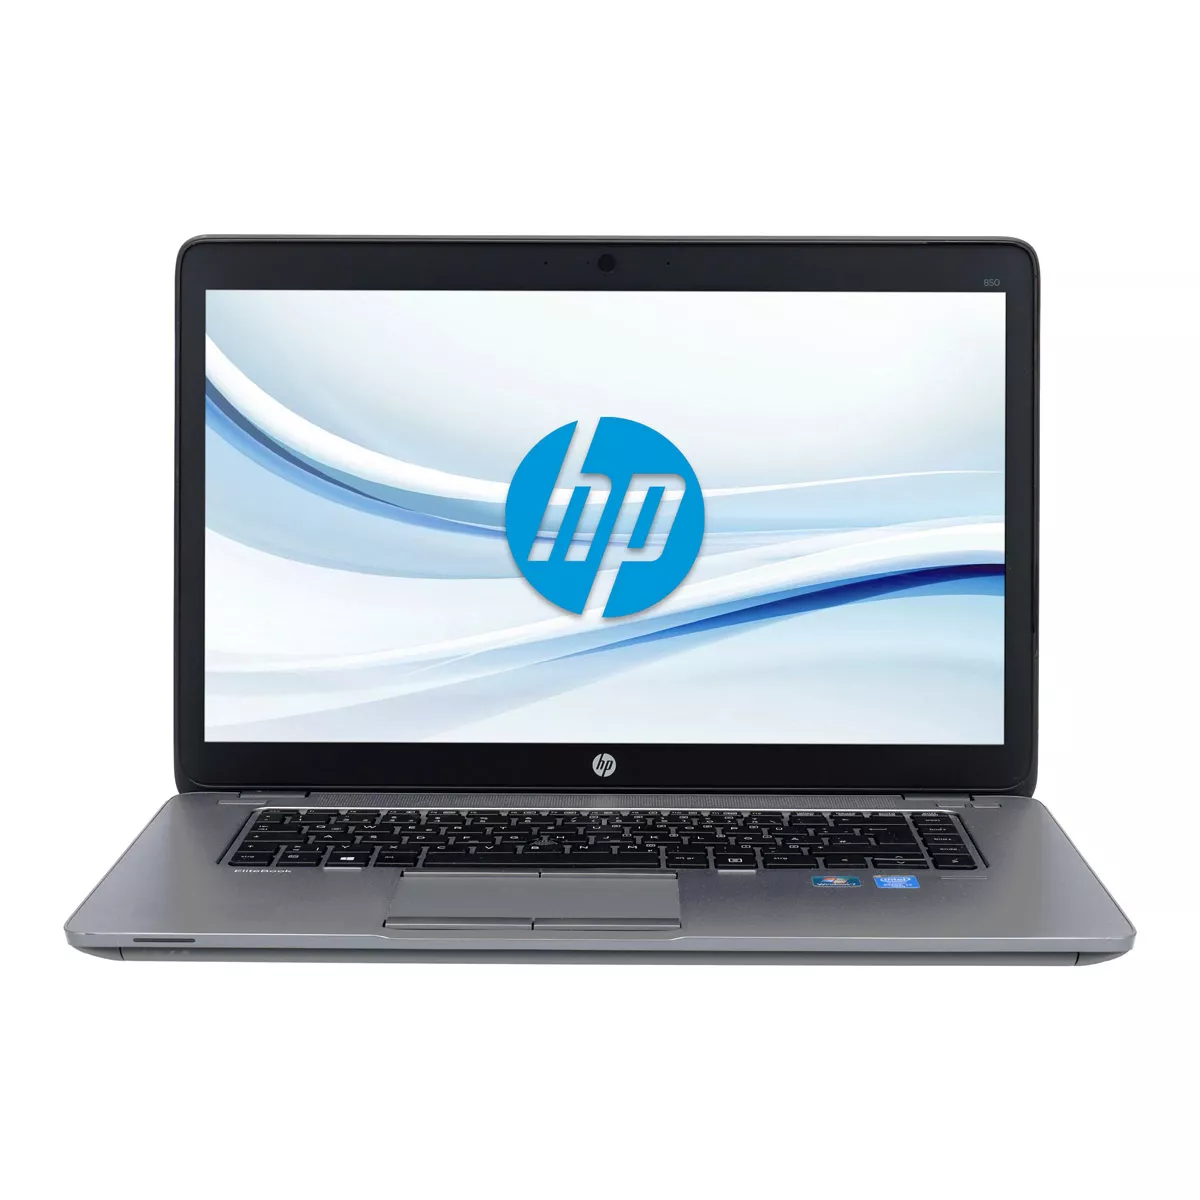 HP EliteBook 850 G2 Core i5 5300U 8 GB 500 GB HDD A+